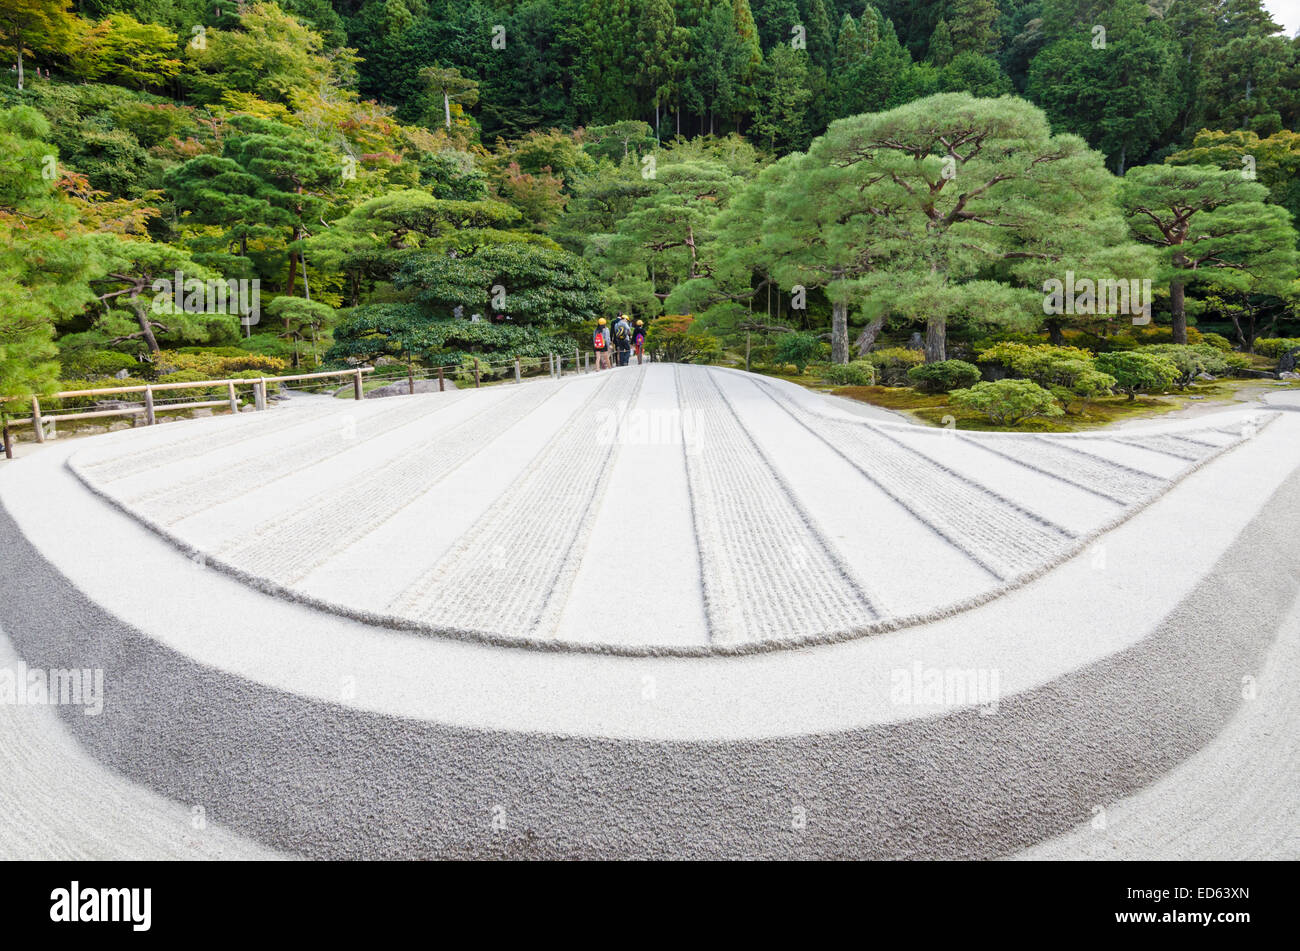 Sand garden of Ginkaku-ji, also known as the Temple of the Silver Pavilion, Kyoto, Kansai, Japan Stock Photo